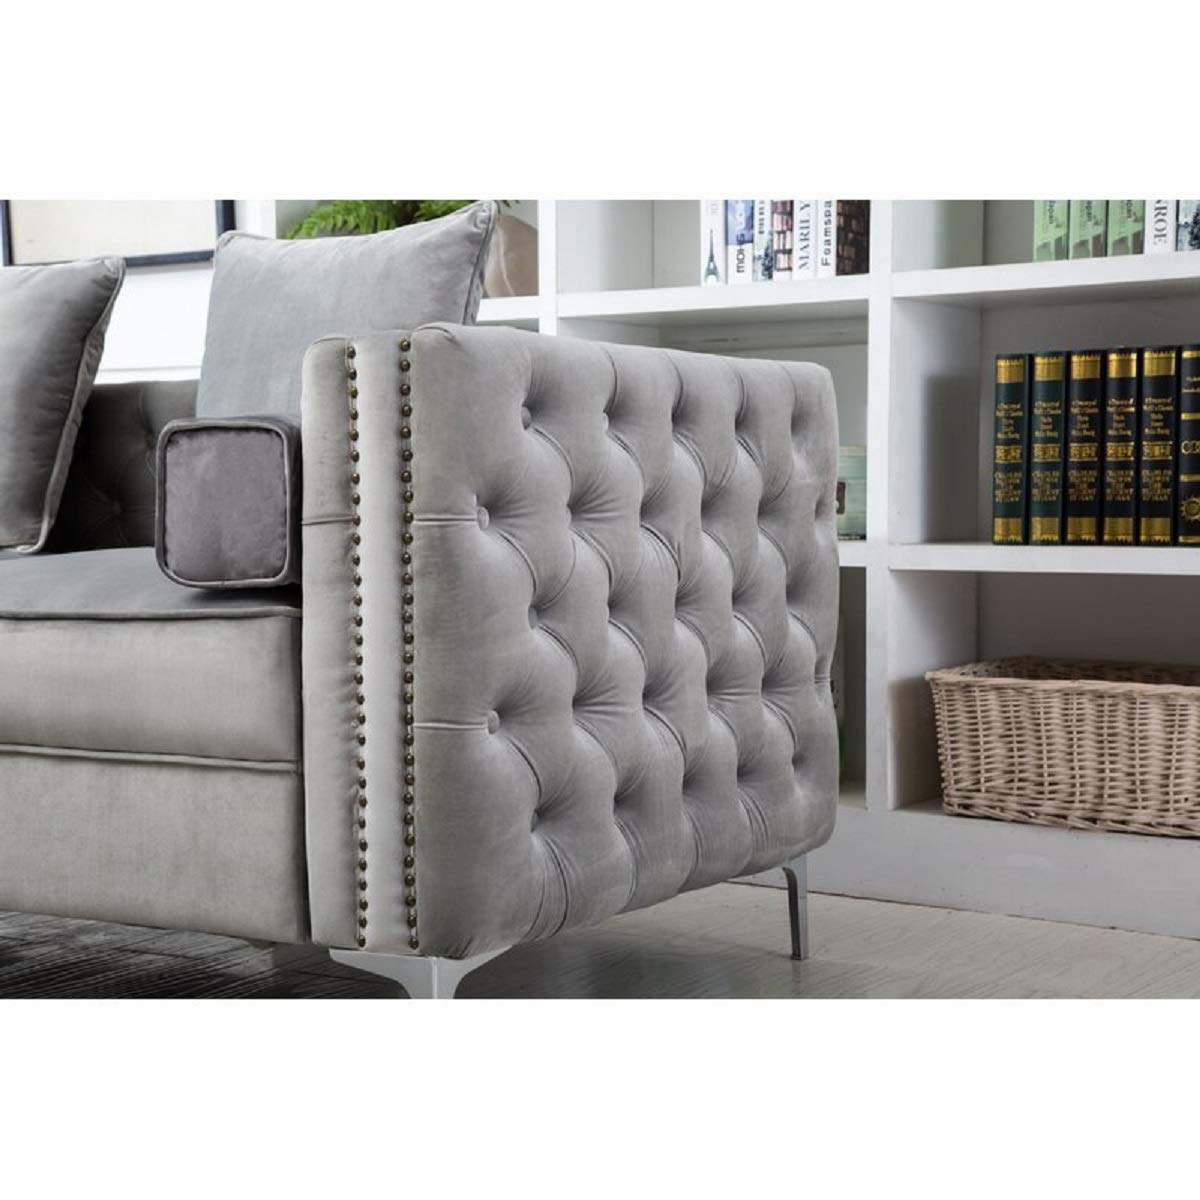 Designer Sofa Set:- Logue 3 Seater Velvet Fabric Sofa (Grey)